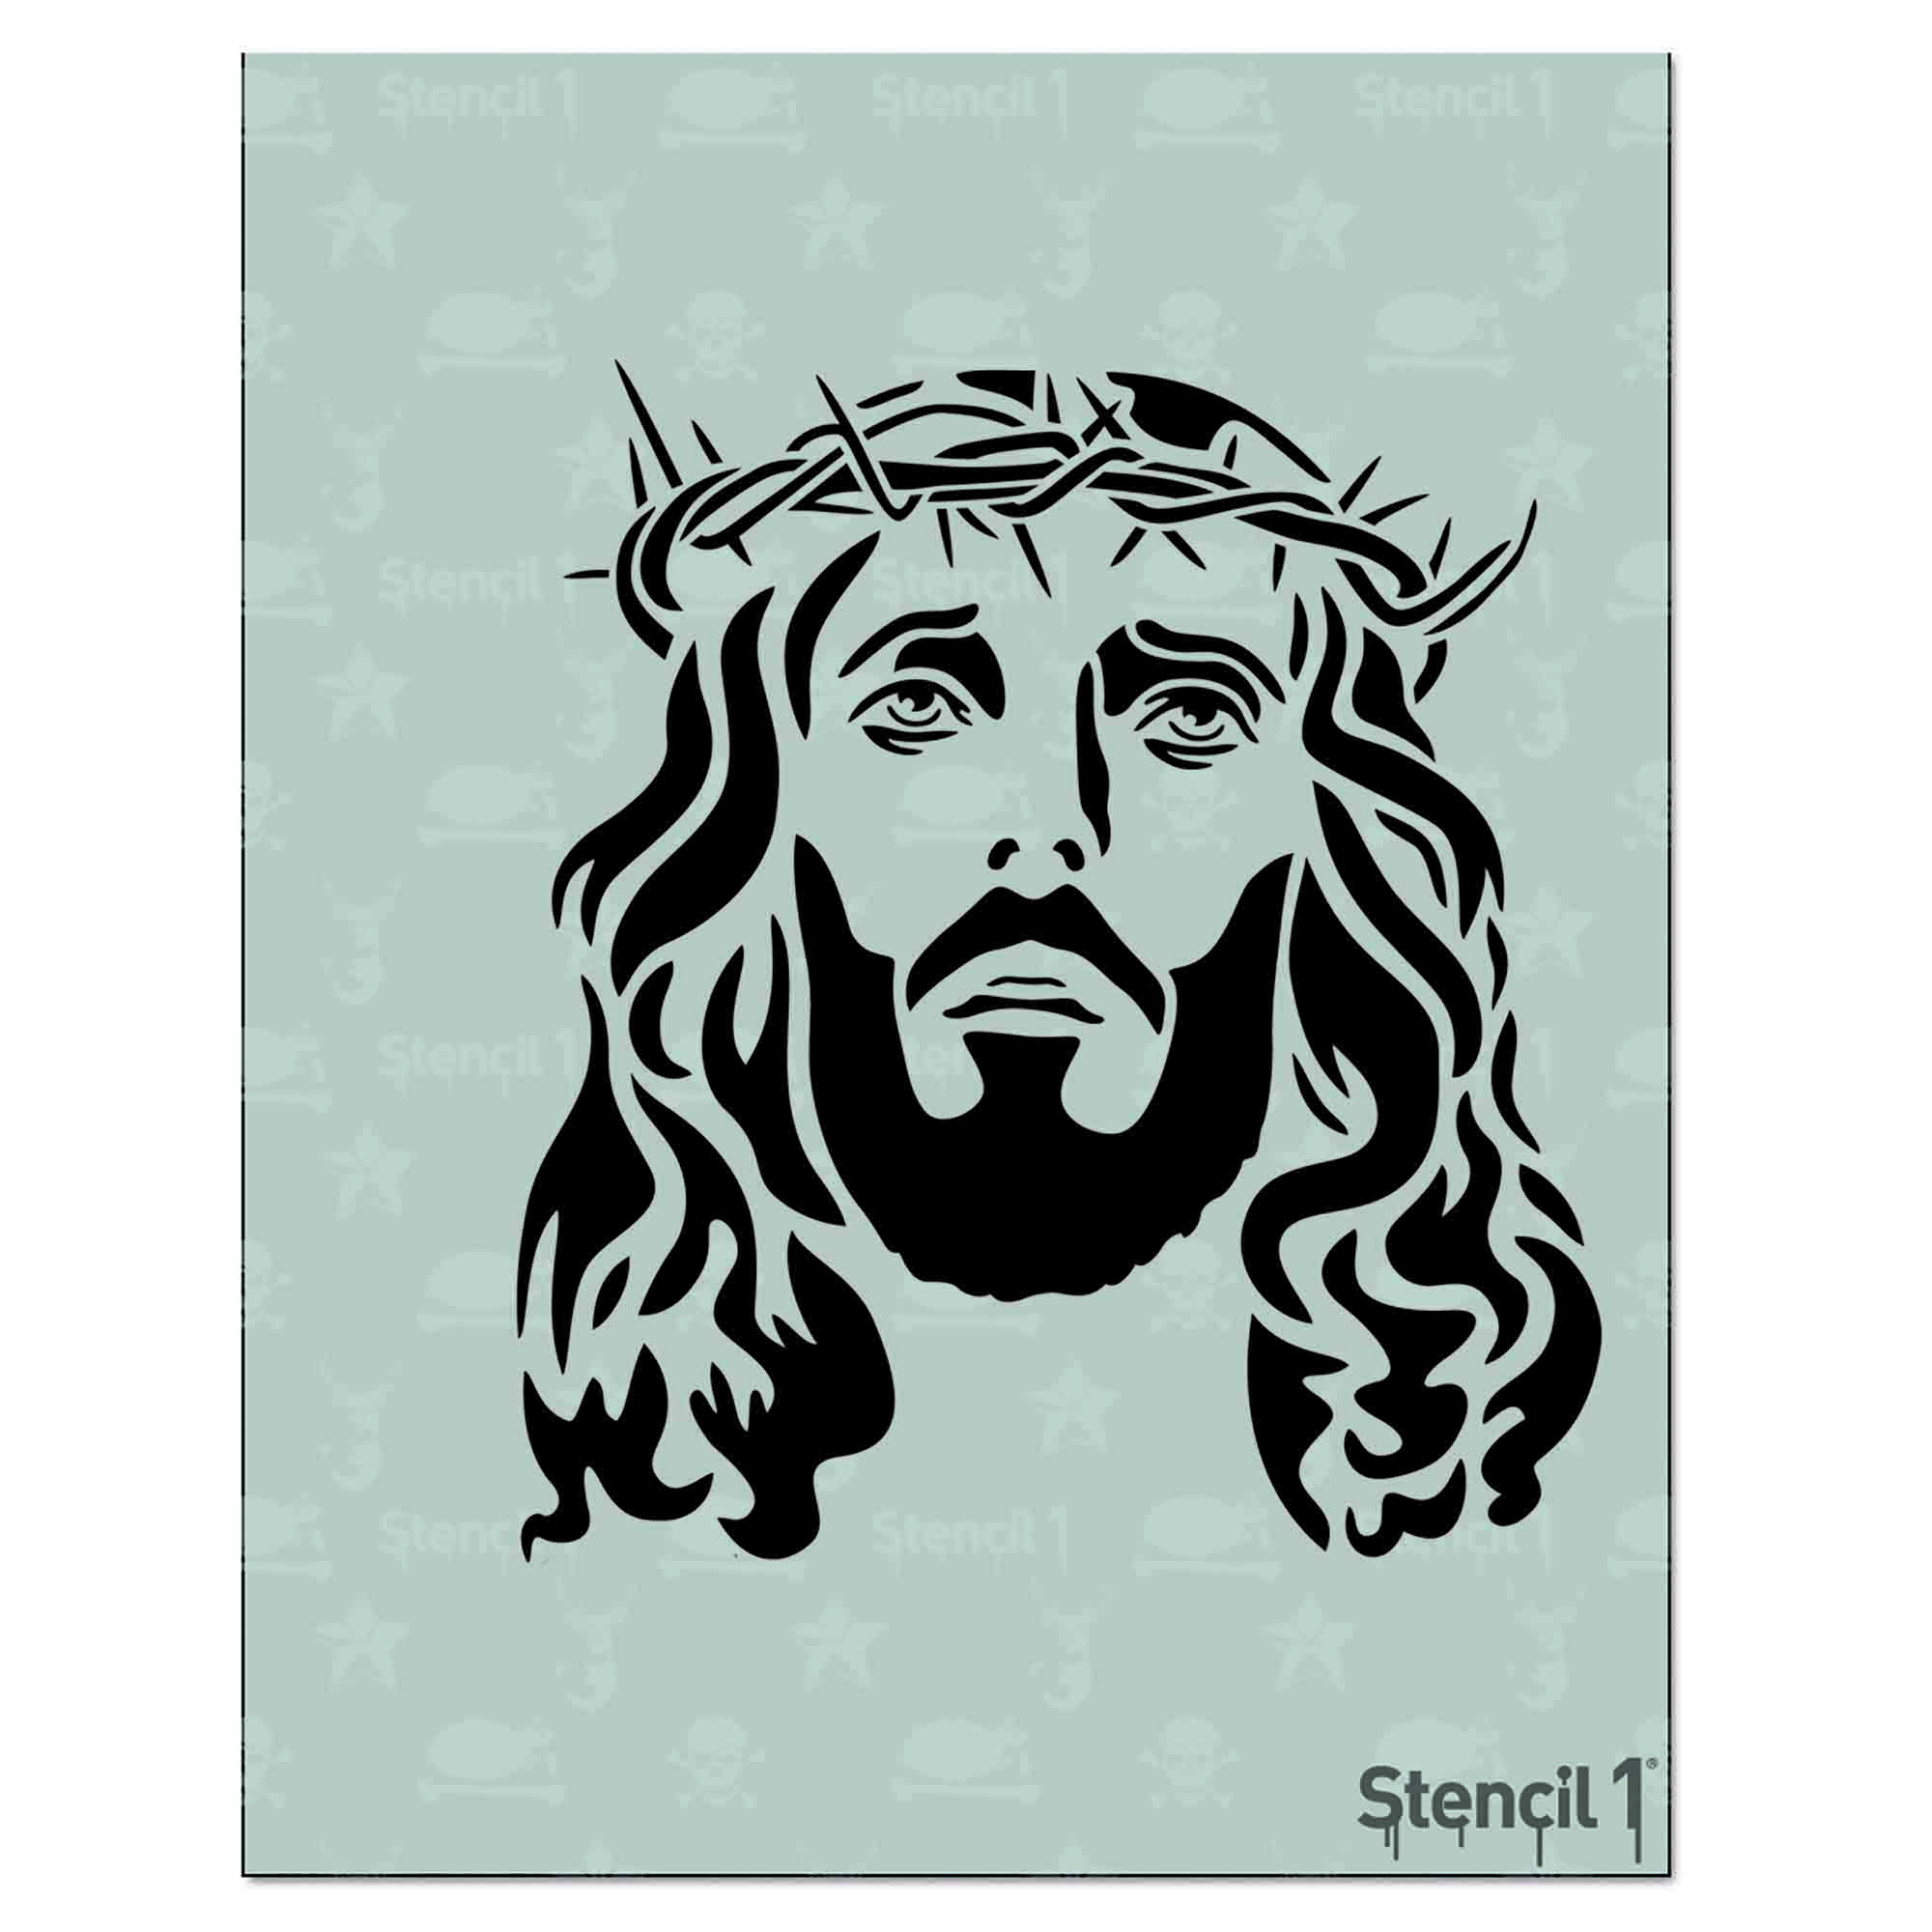 93-00010 Graffiti Jesus Stencil